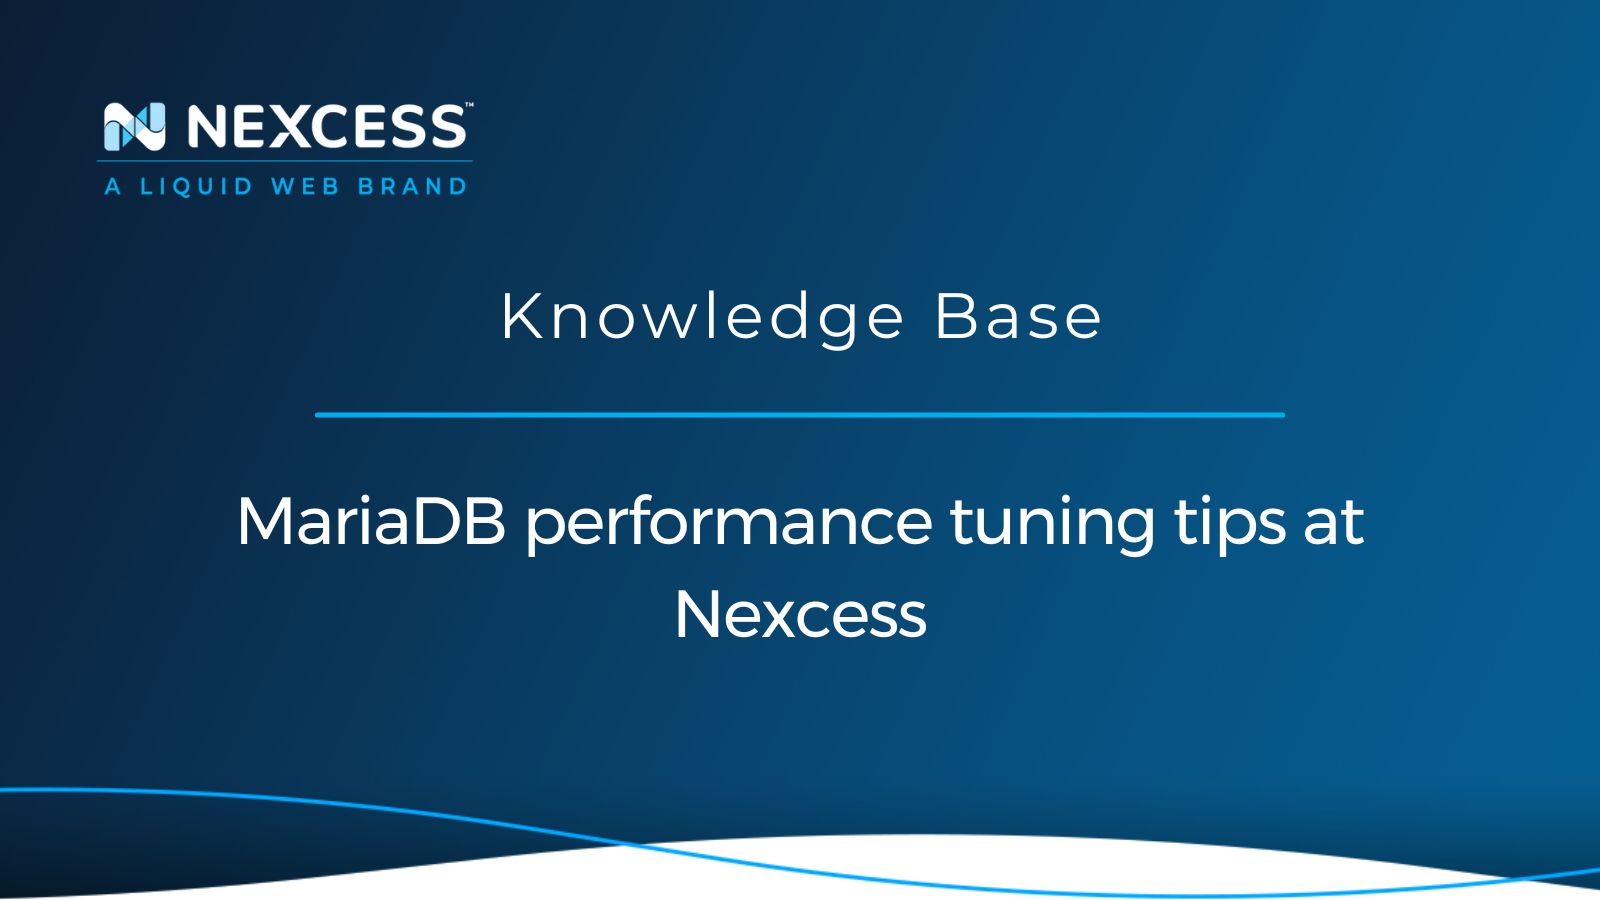 MariaDB performance tuning tips at Nexcess